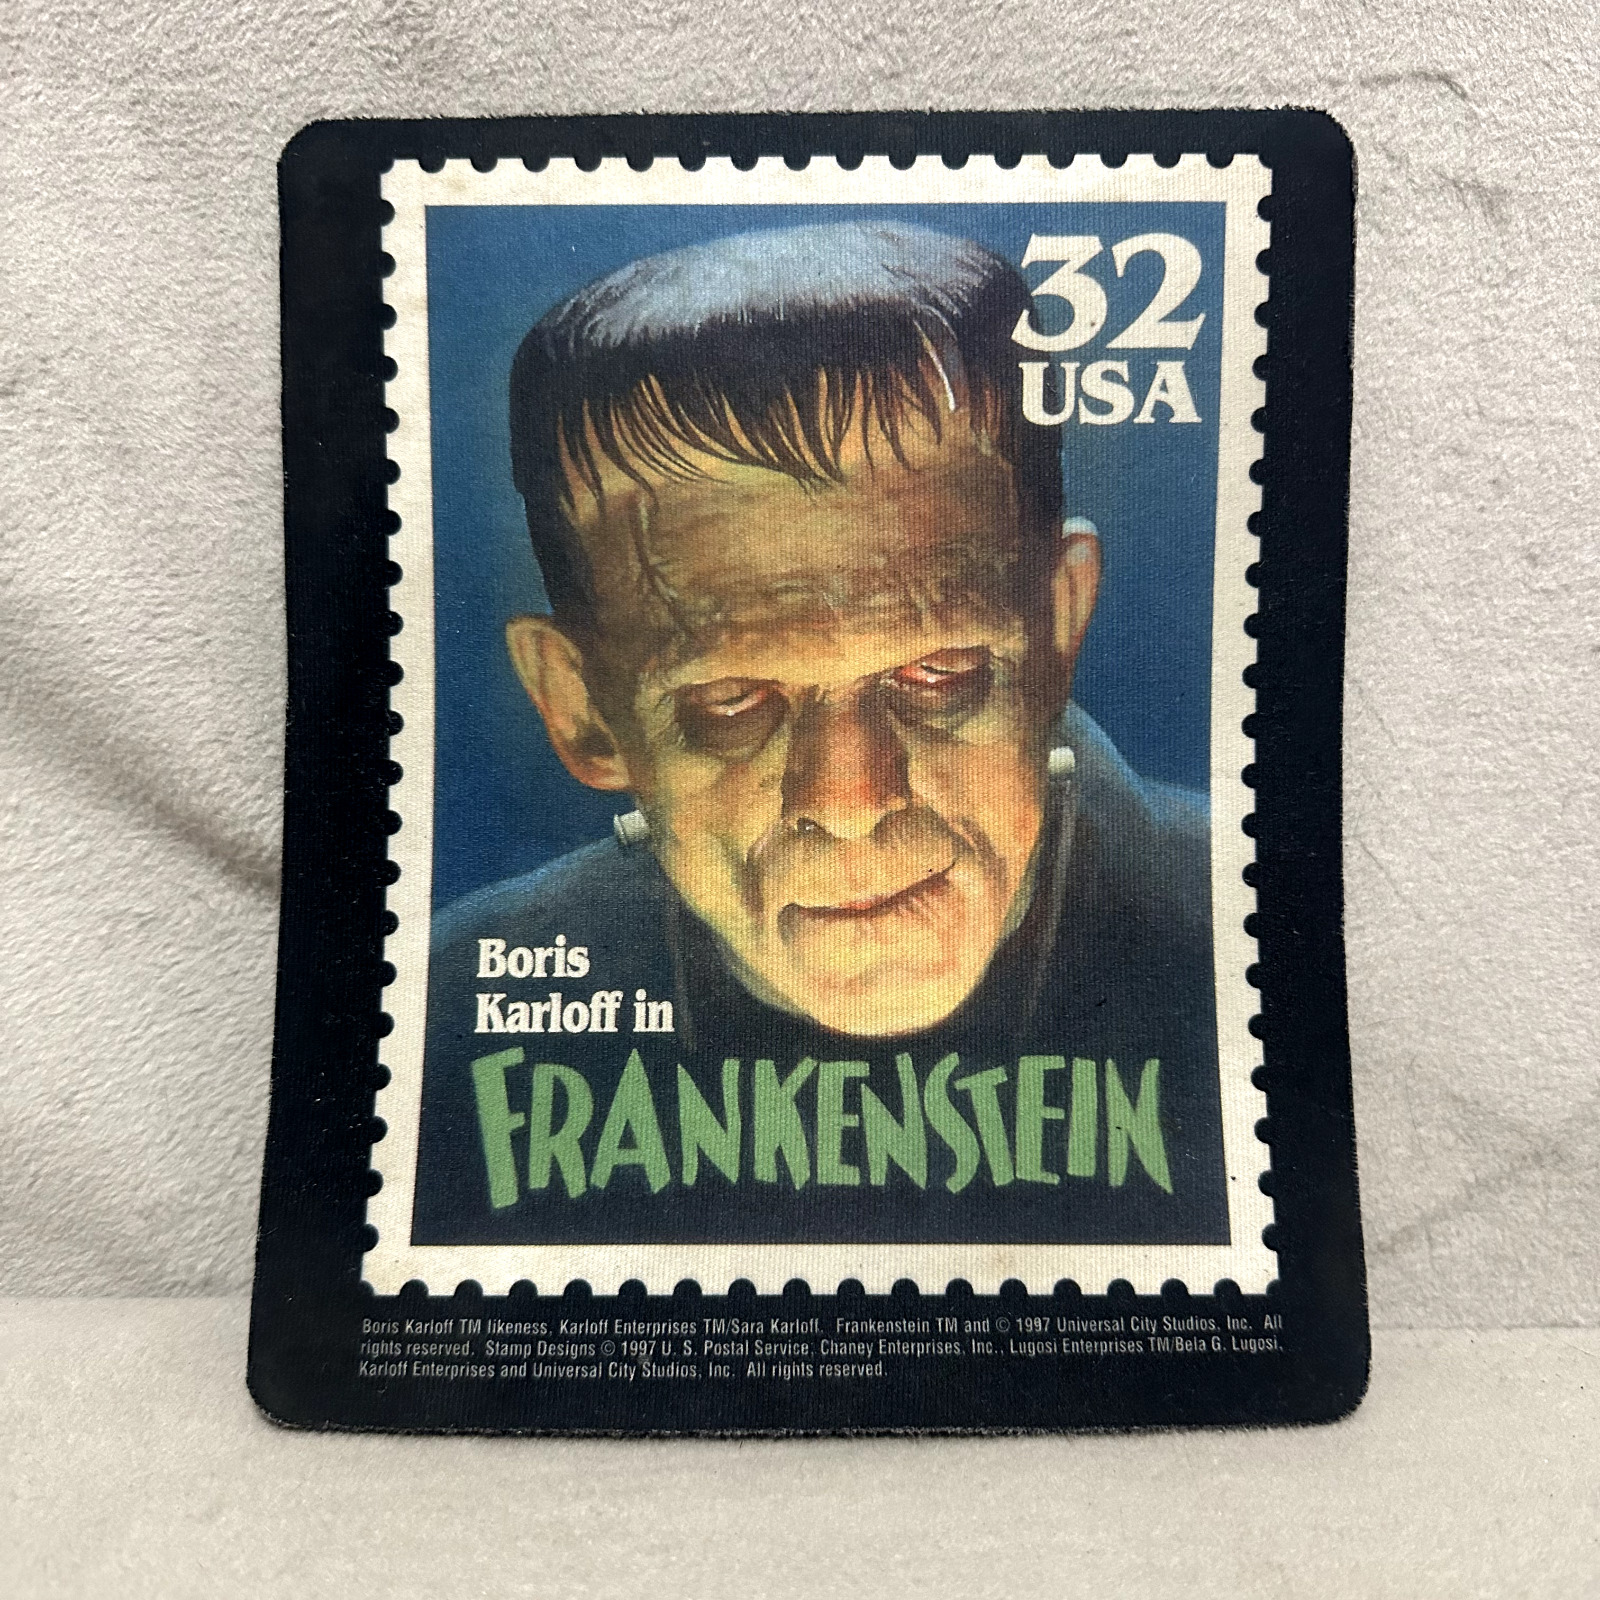 Vintage 1997 Mouse Pad Boris Karloff Frankenstein Stamp Design Universal Studios